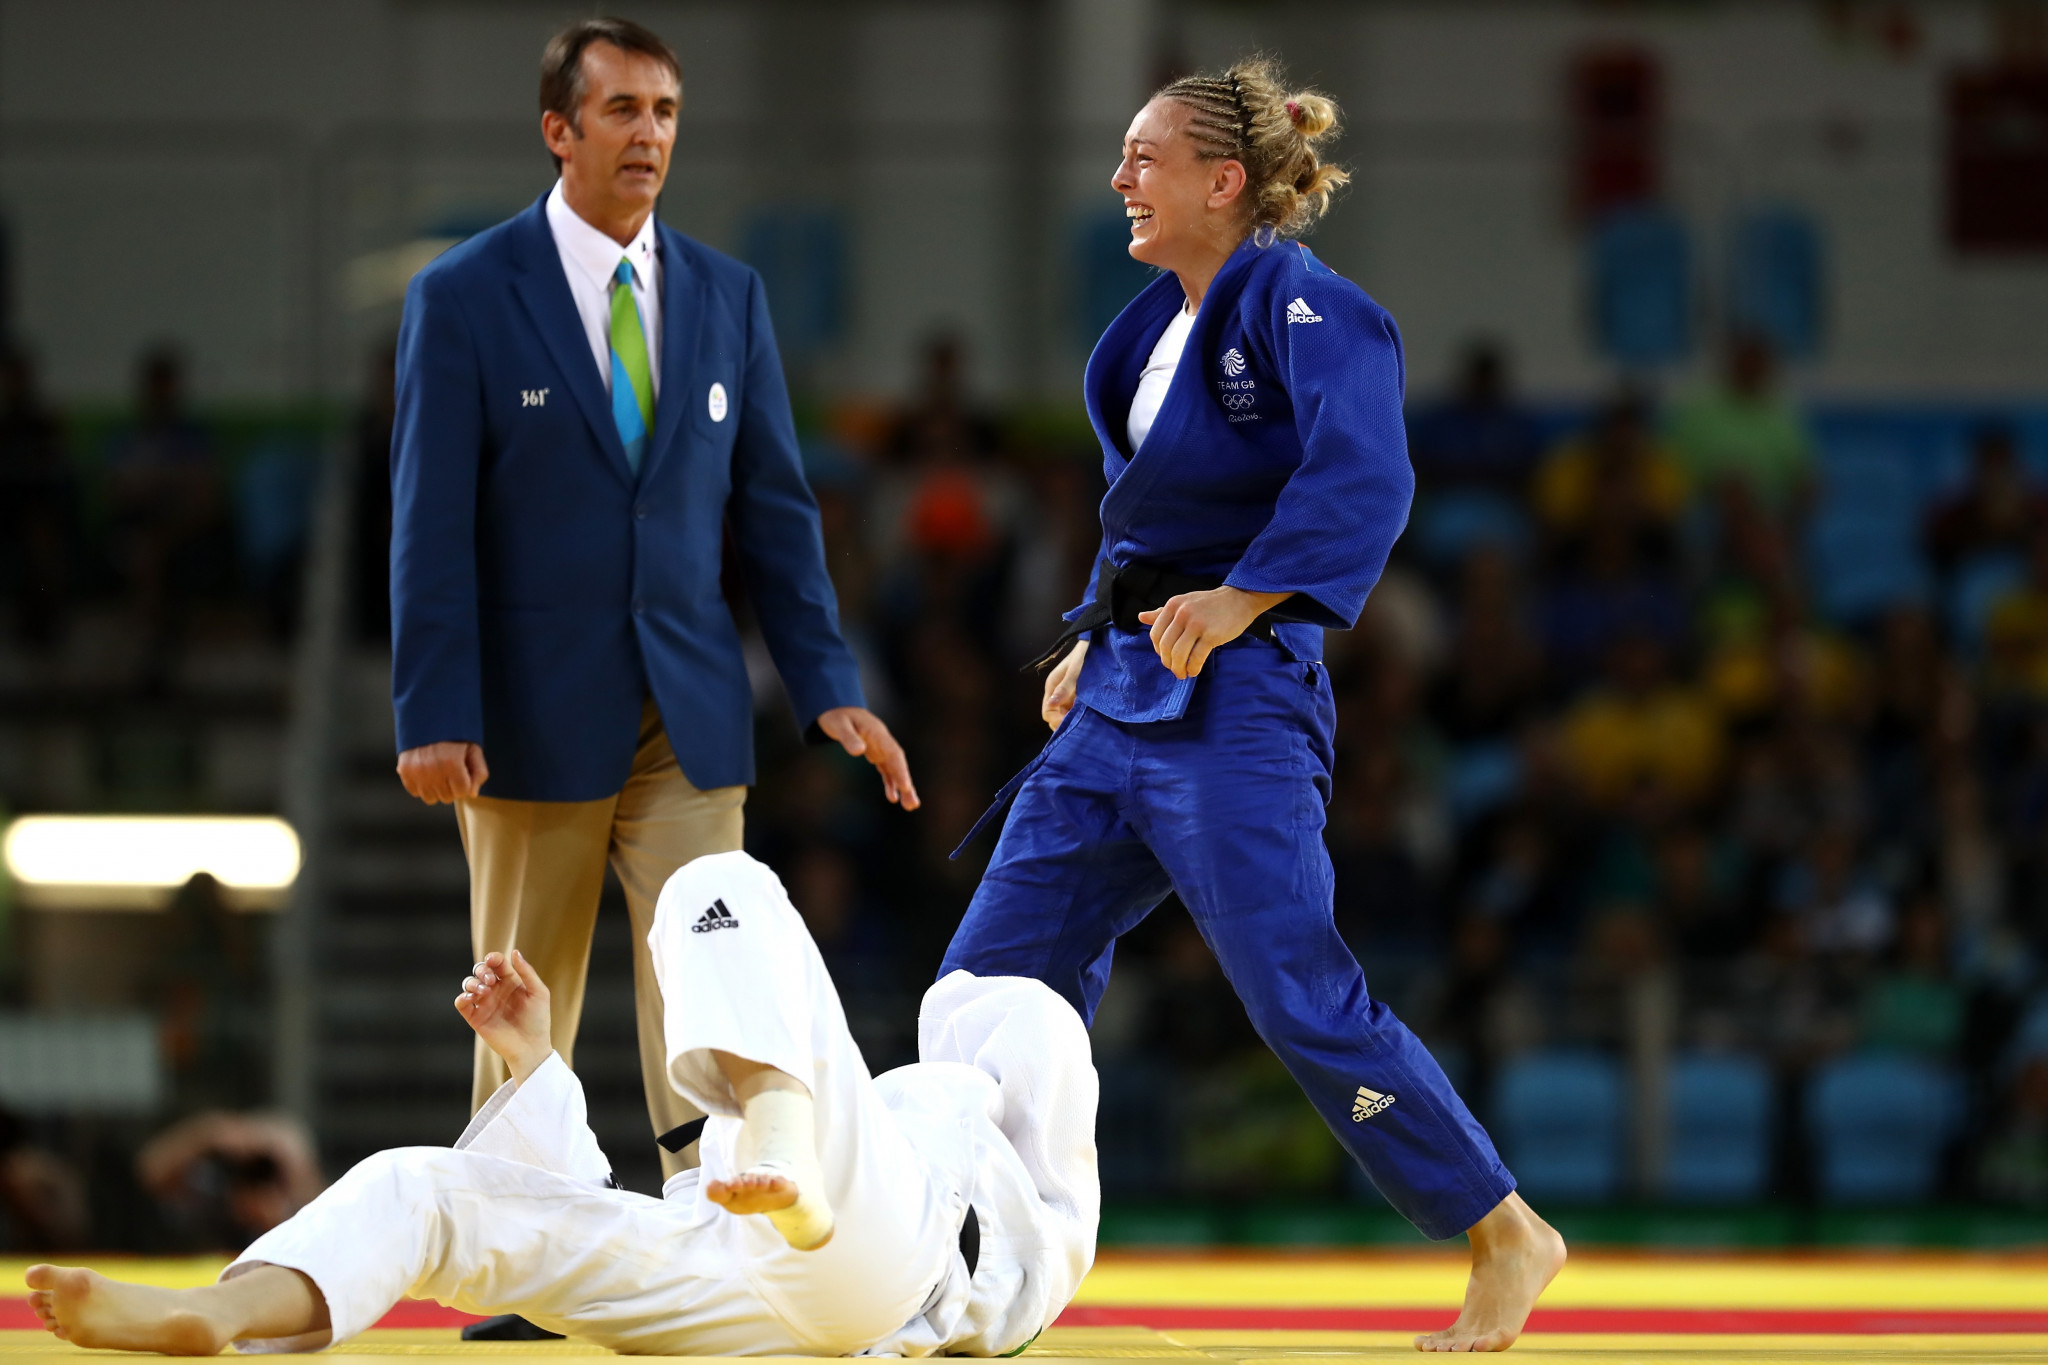 Olympic bronze medallist Conway headlines British Judo's team for 2018 Paris Grand Slam